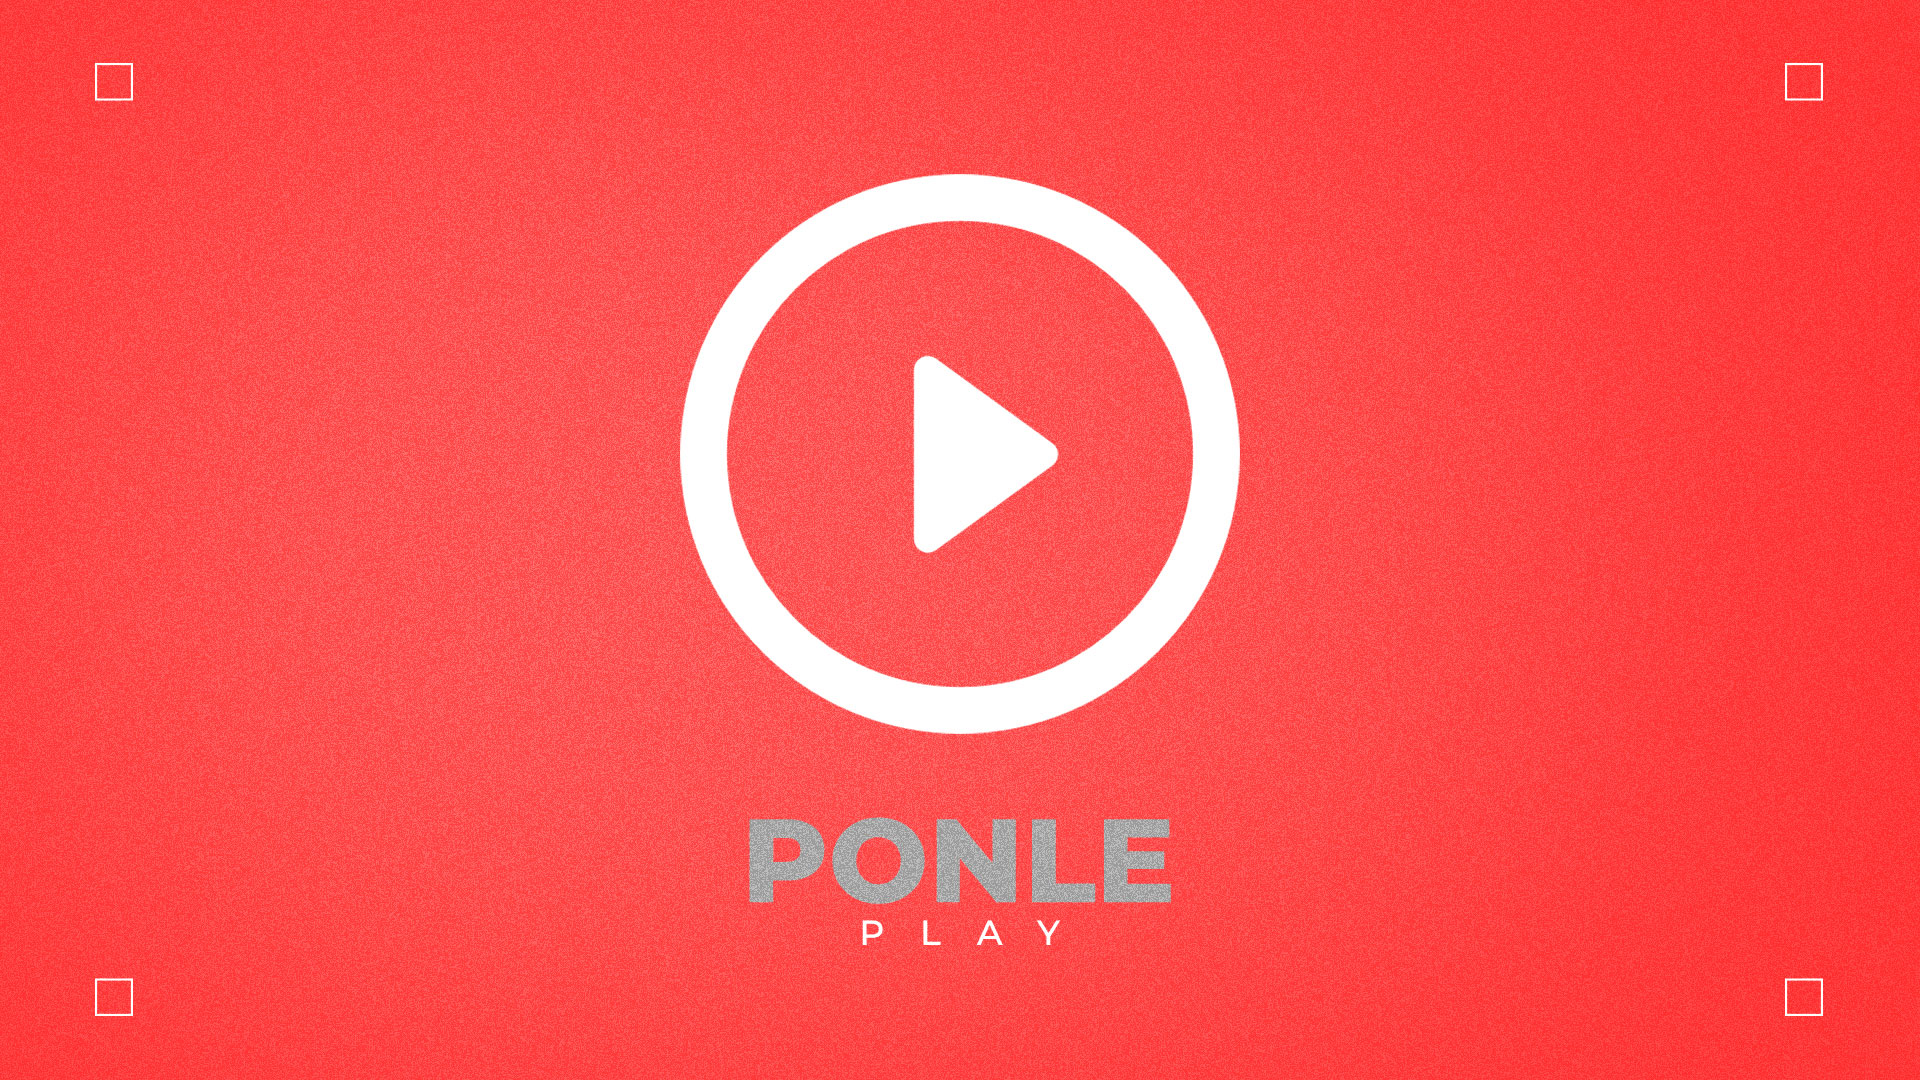 Ponle Play